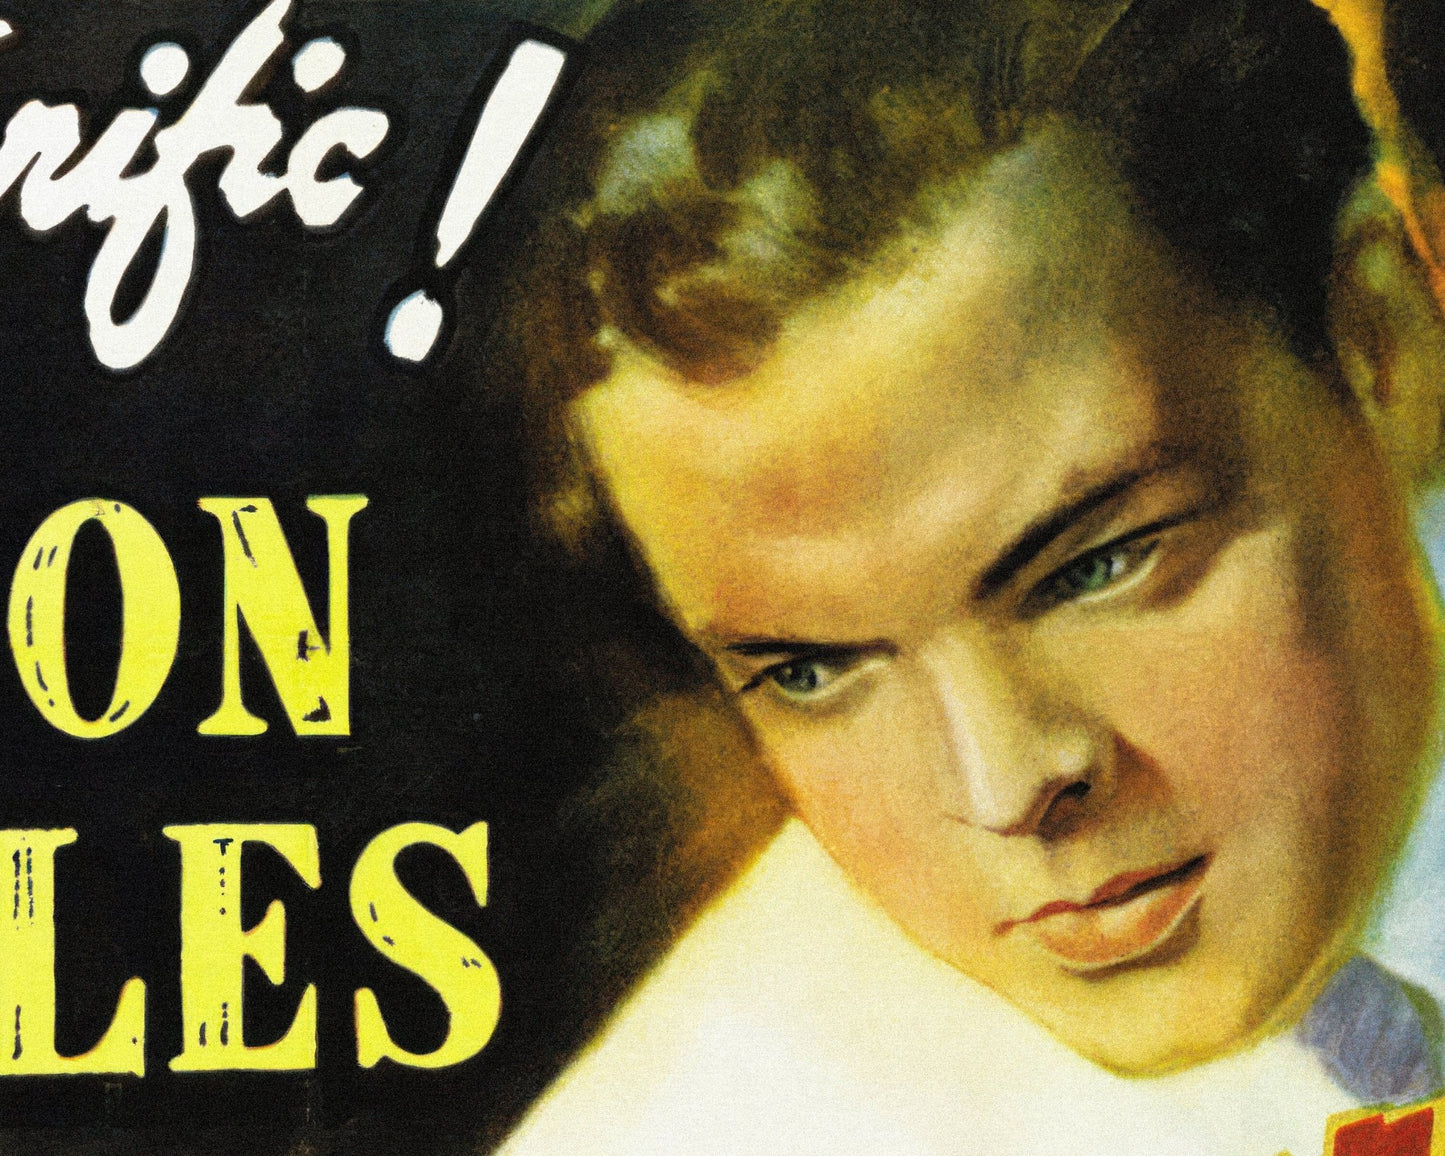 Vintage Movie Poster "Citizen Kane" (1941) - Mabon Gallery